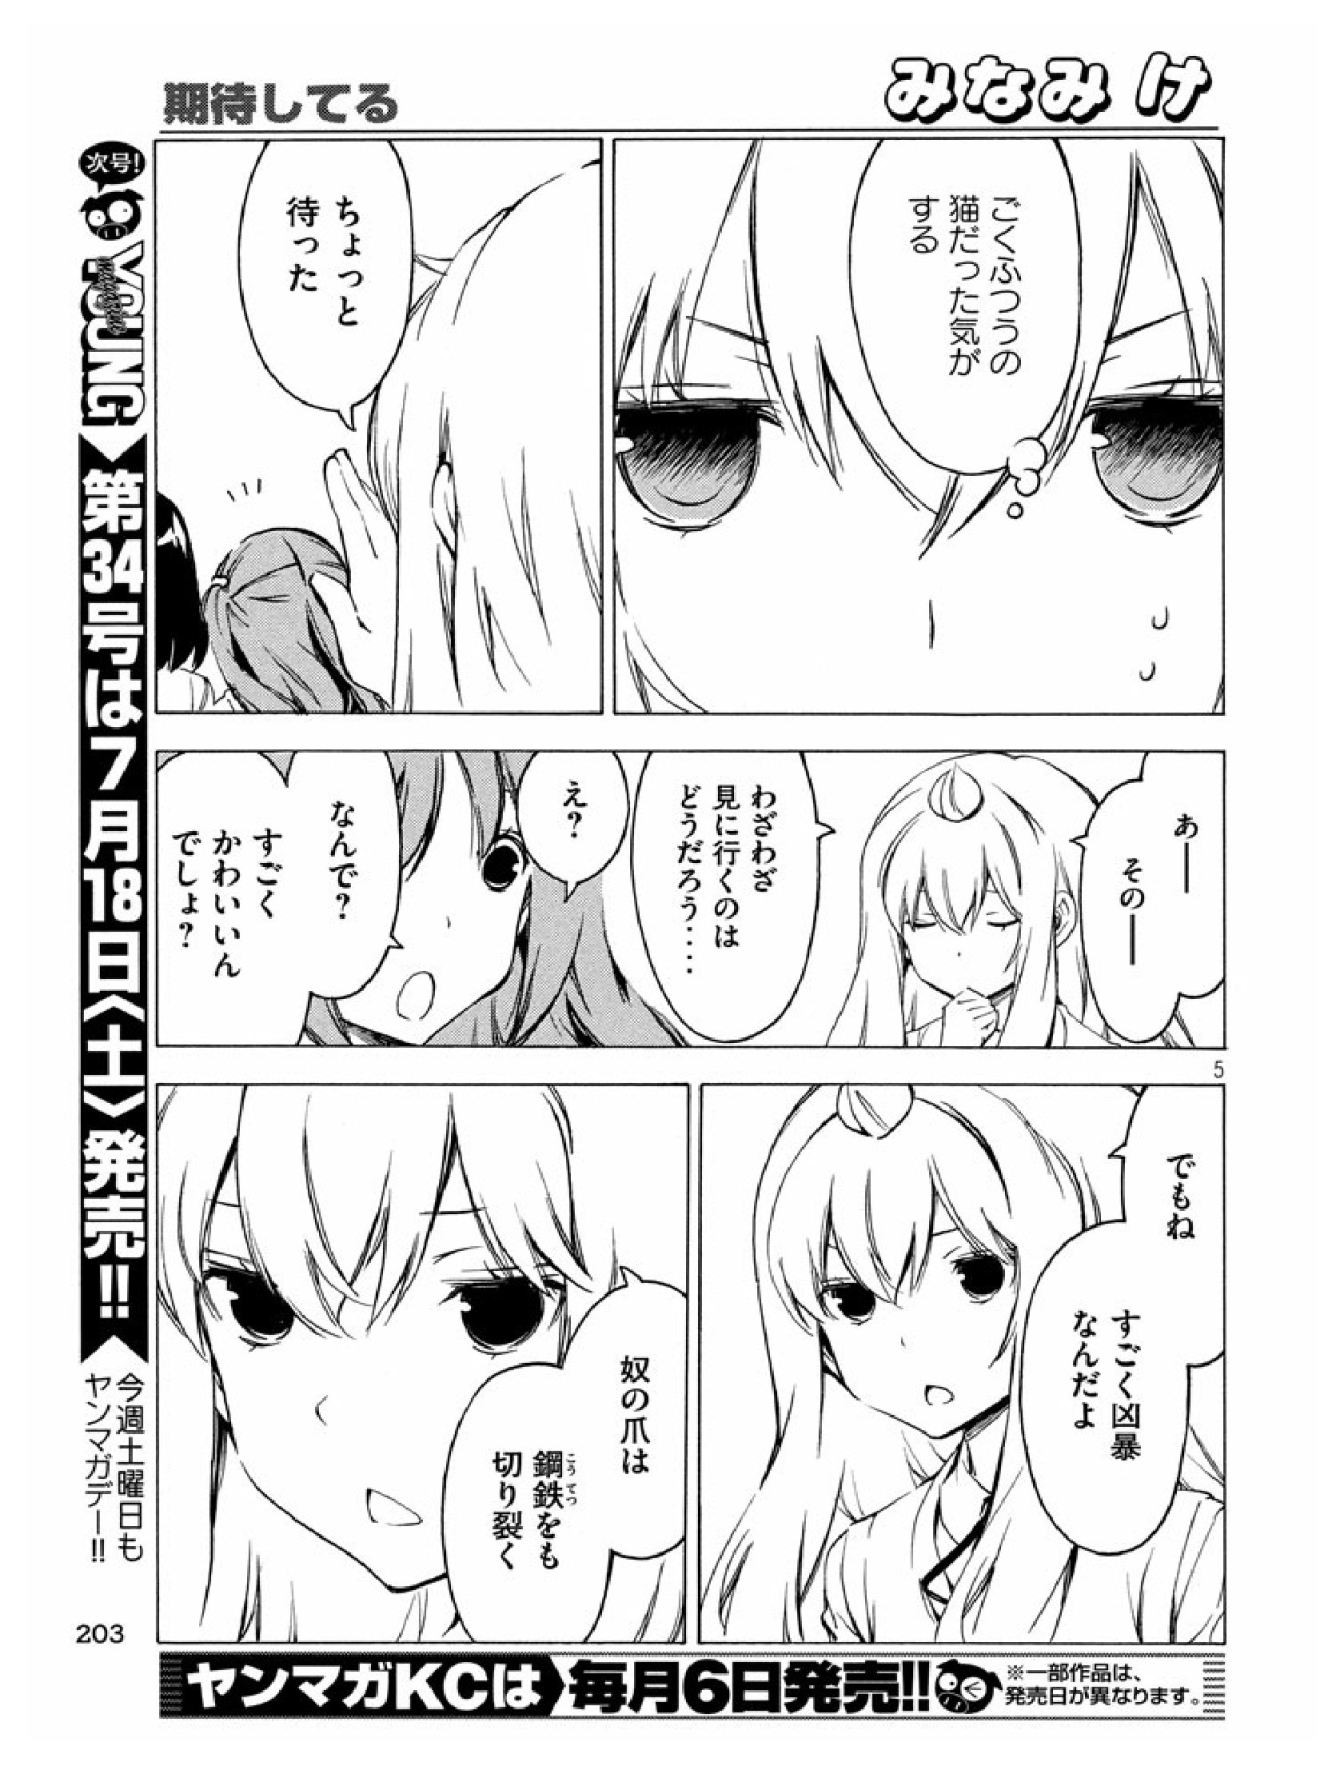 Minami-ke - Chapter 272 - Page 5